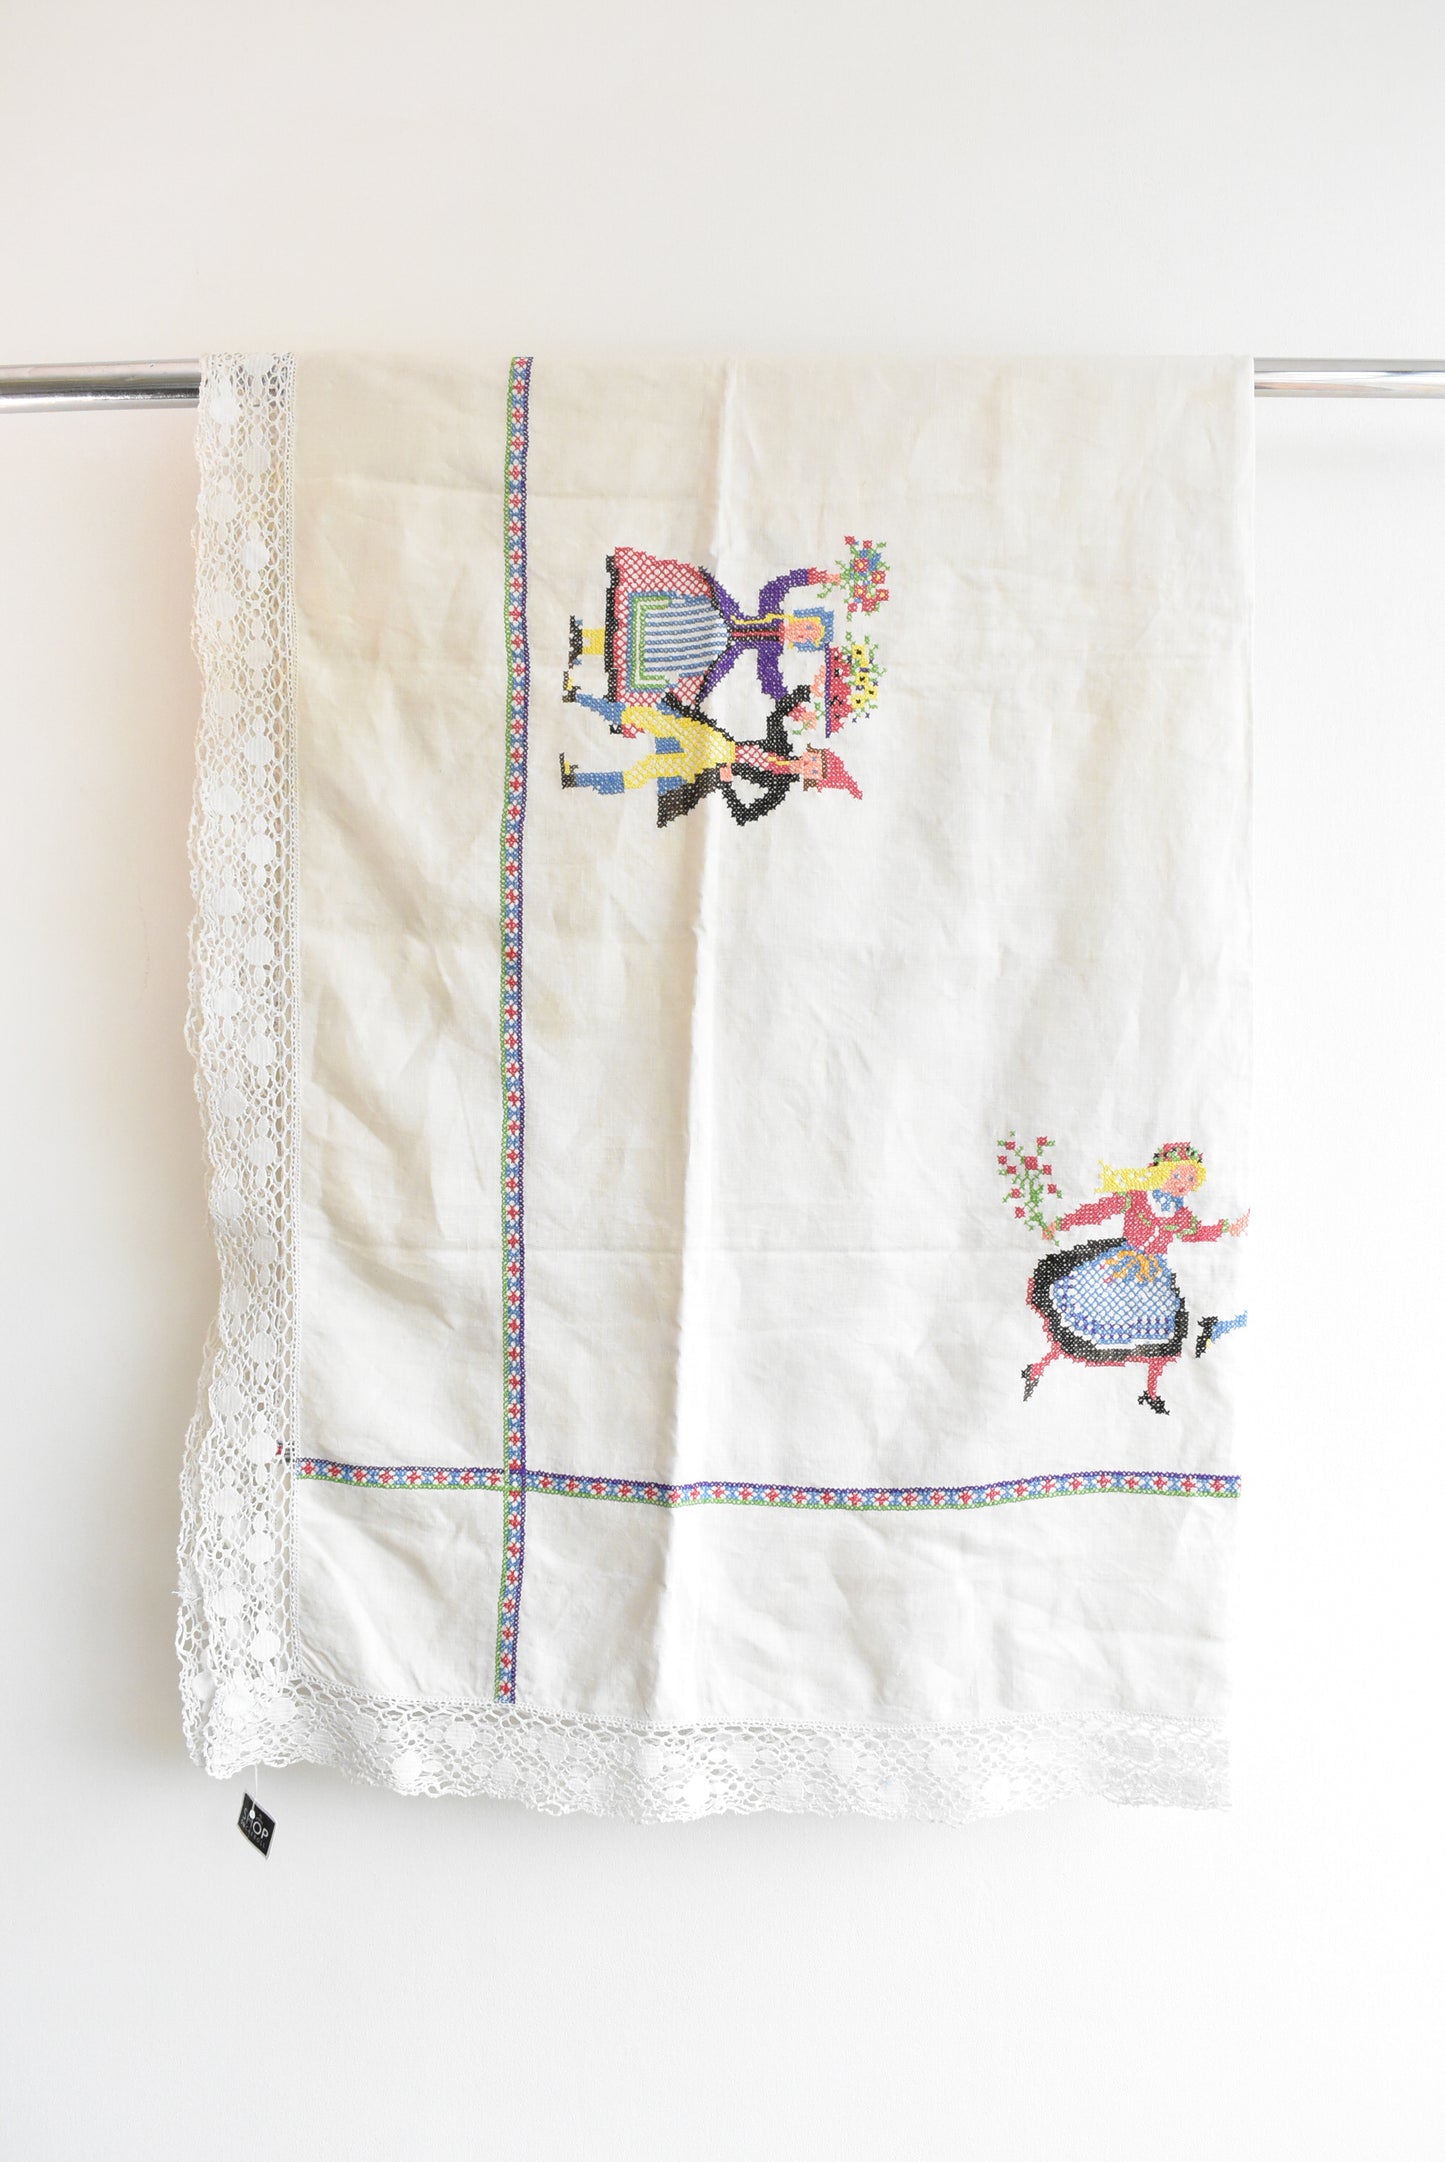 Large vintage cross-stitch tablecloth